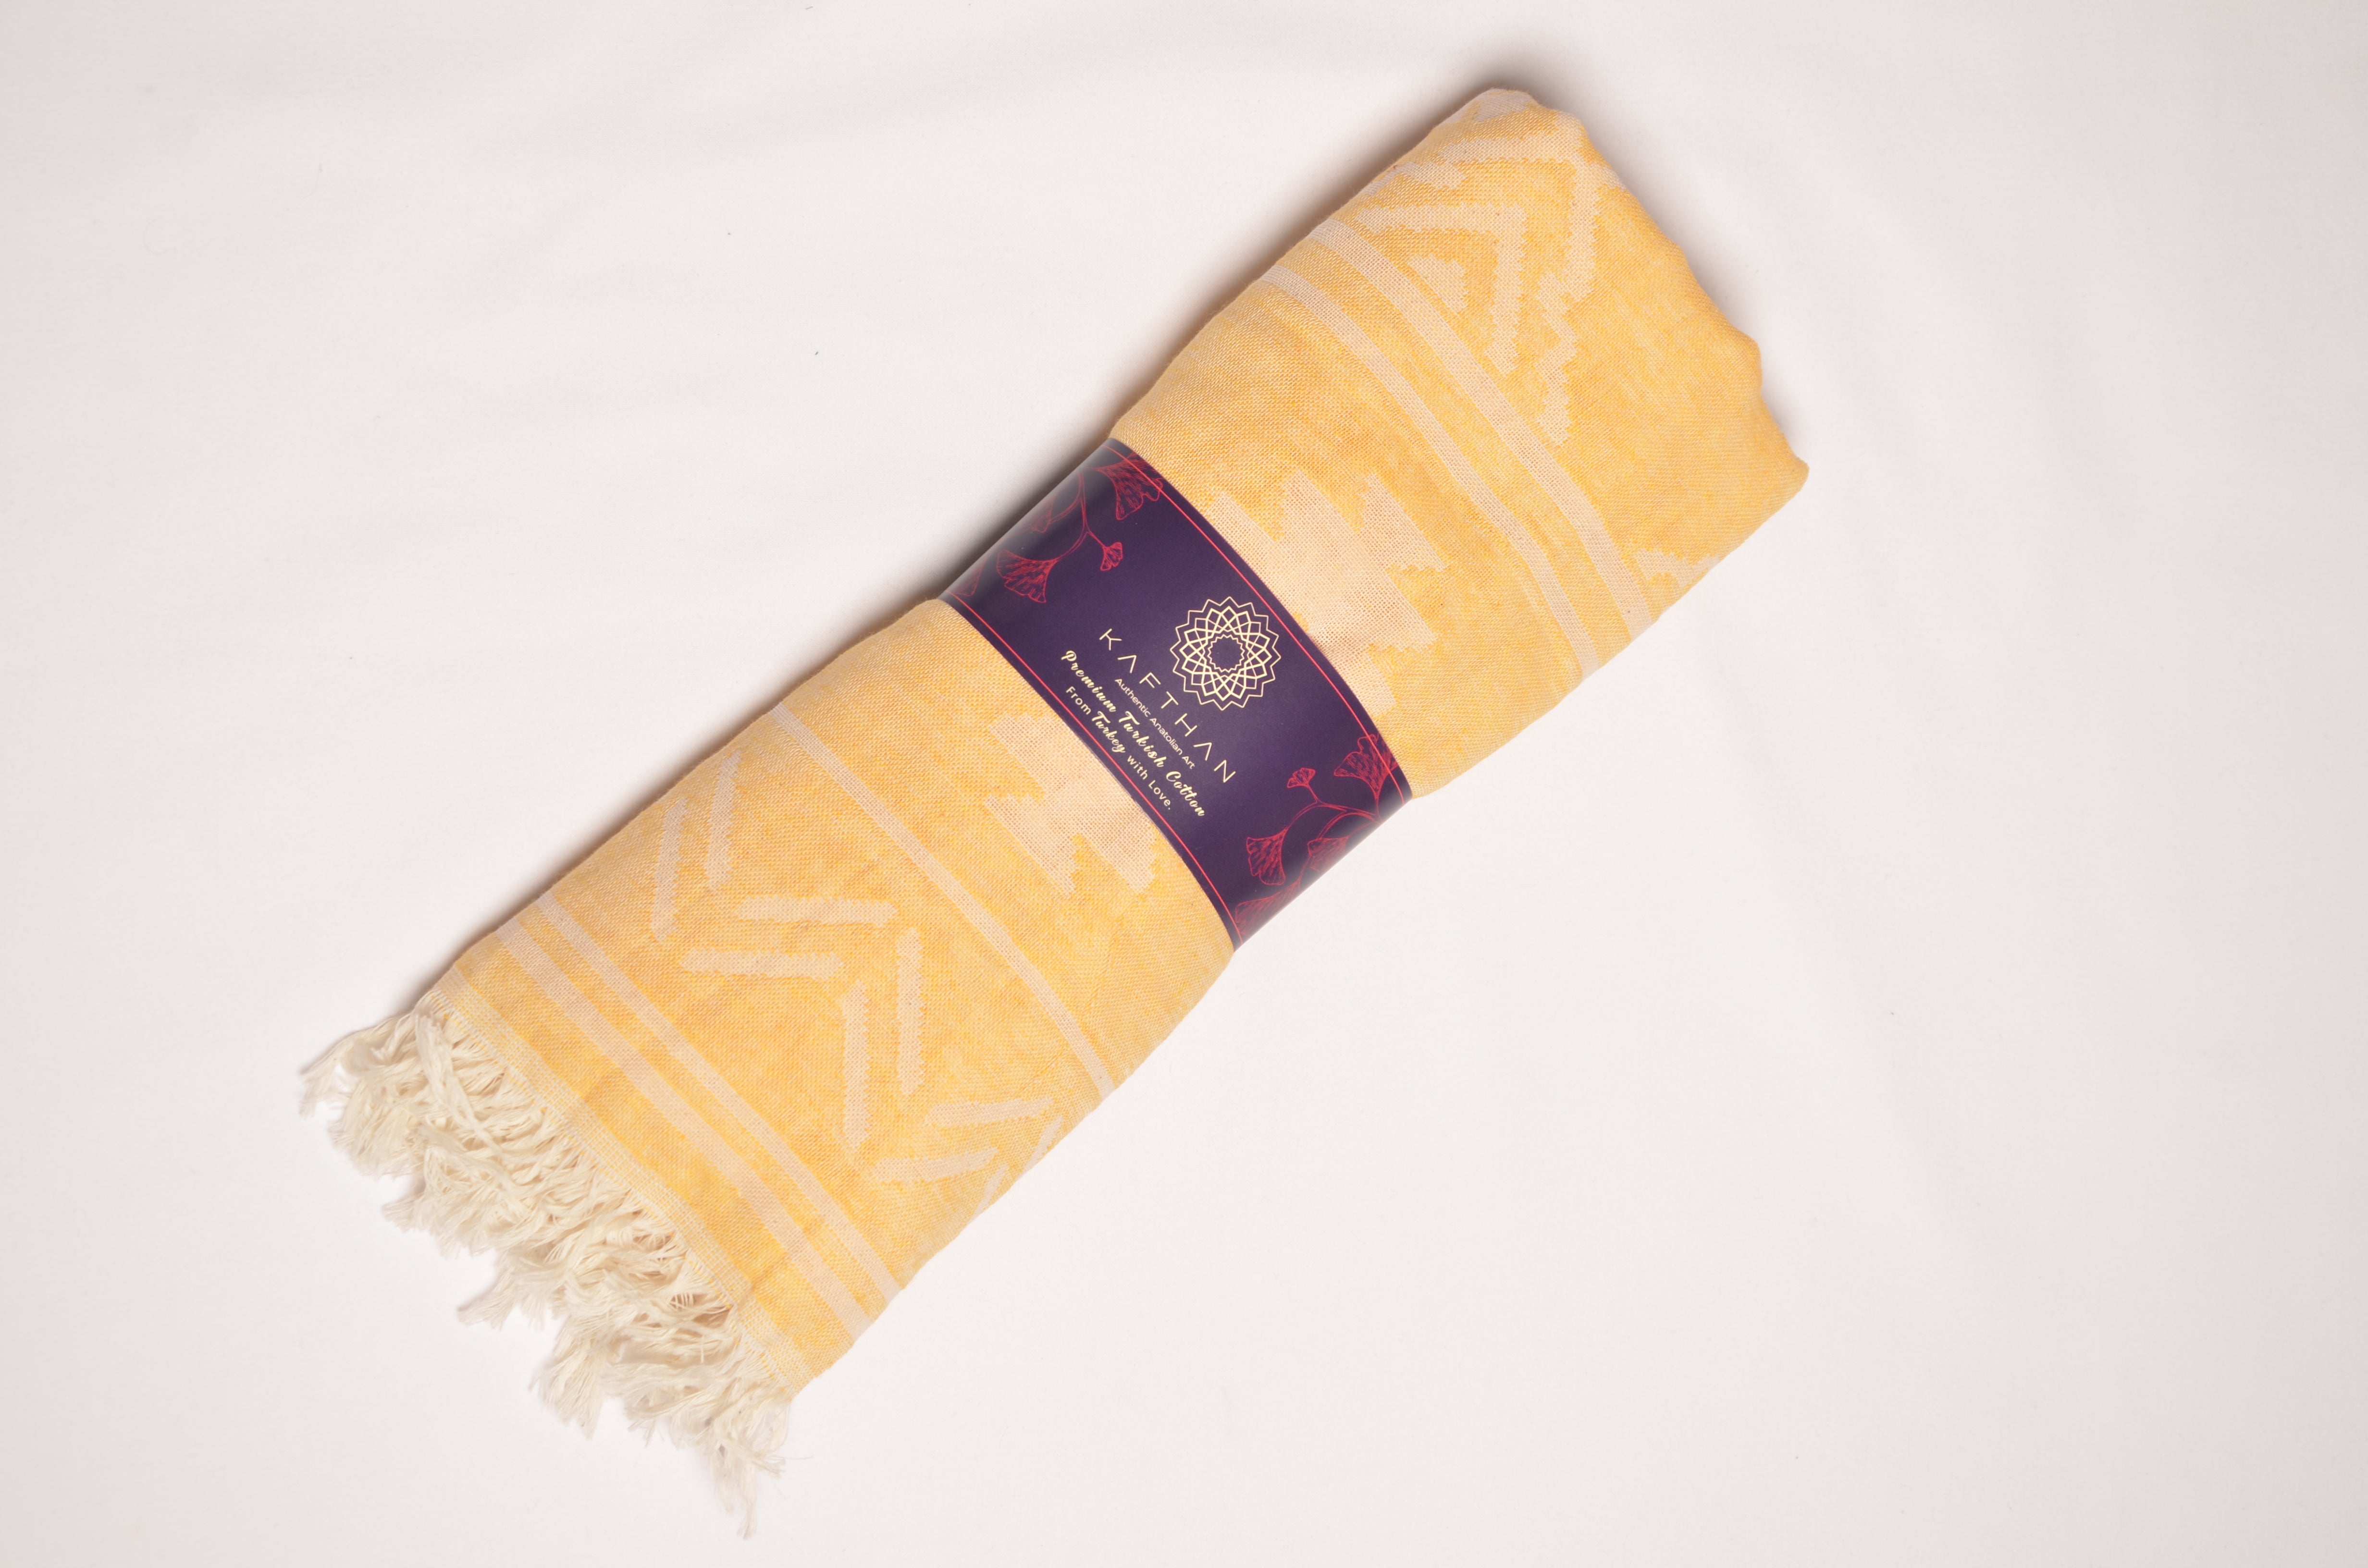 Aztec Yellow Turkish Towels [Bath & Beach Towel, Picnic Blanket] Premium Cotton Turkish Beach Towel - Lightweight Turkish Bath Towel - KAFTHAN